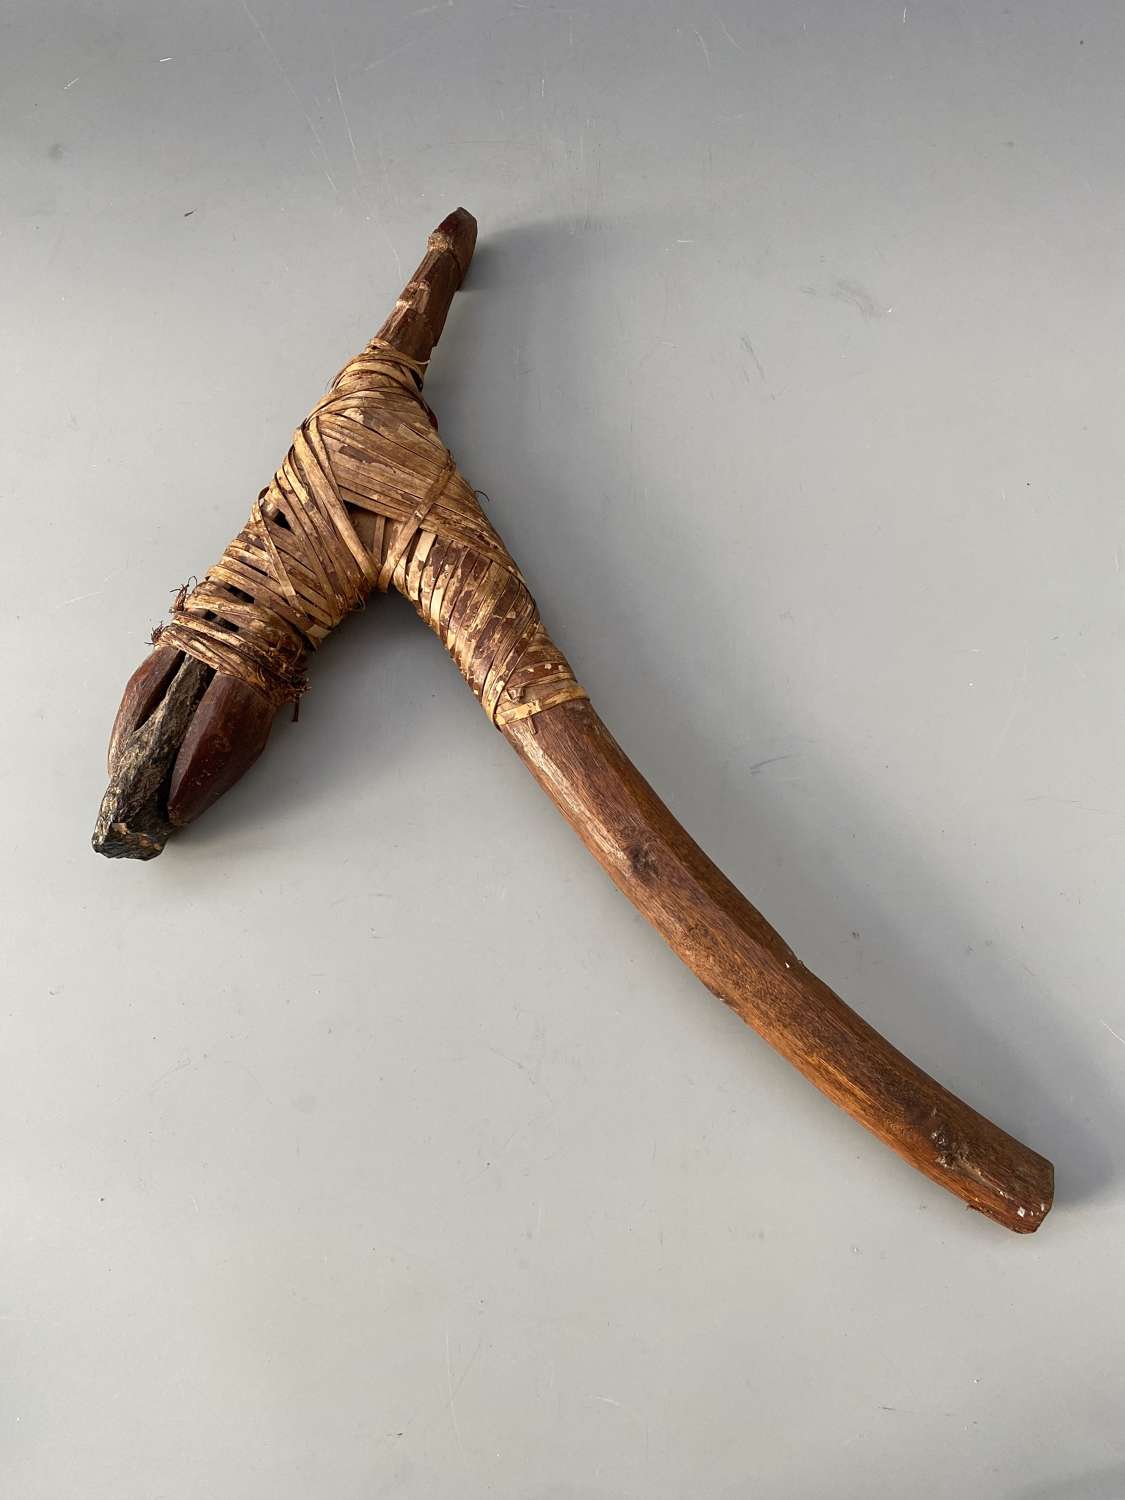 A Papua New Guinea stone axe